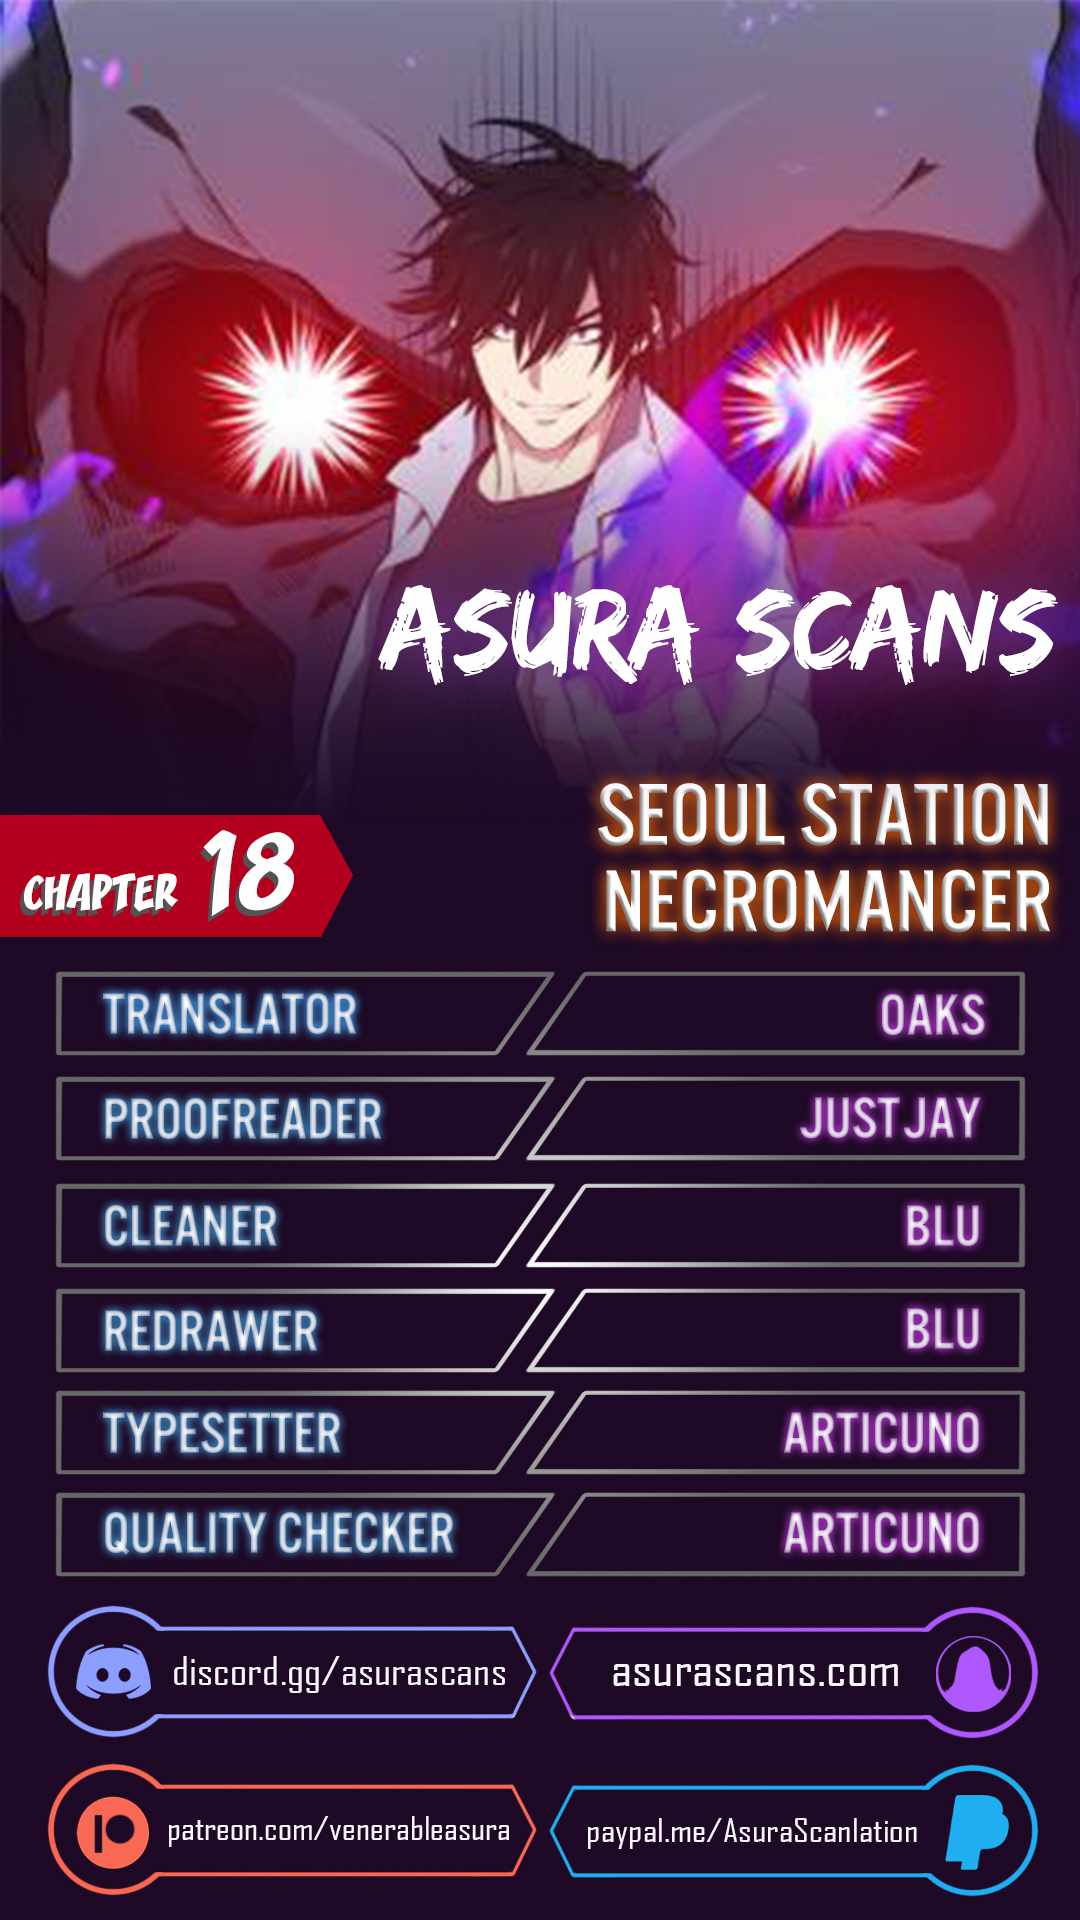 Seoul Station’s Necromancer chapter 18